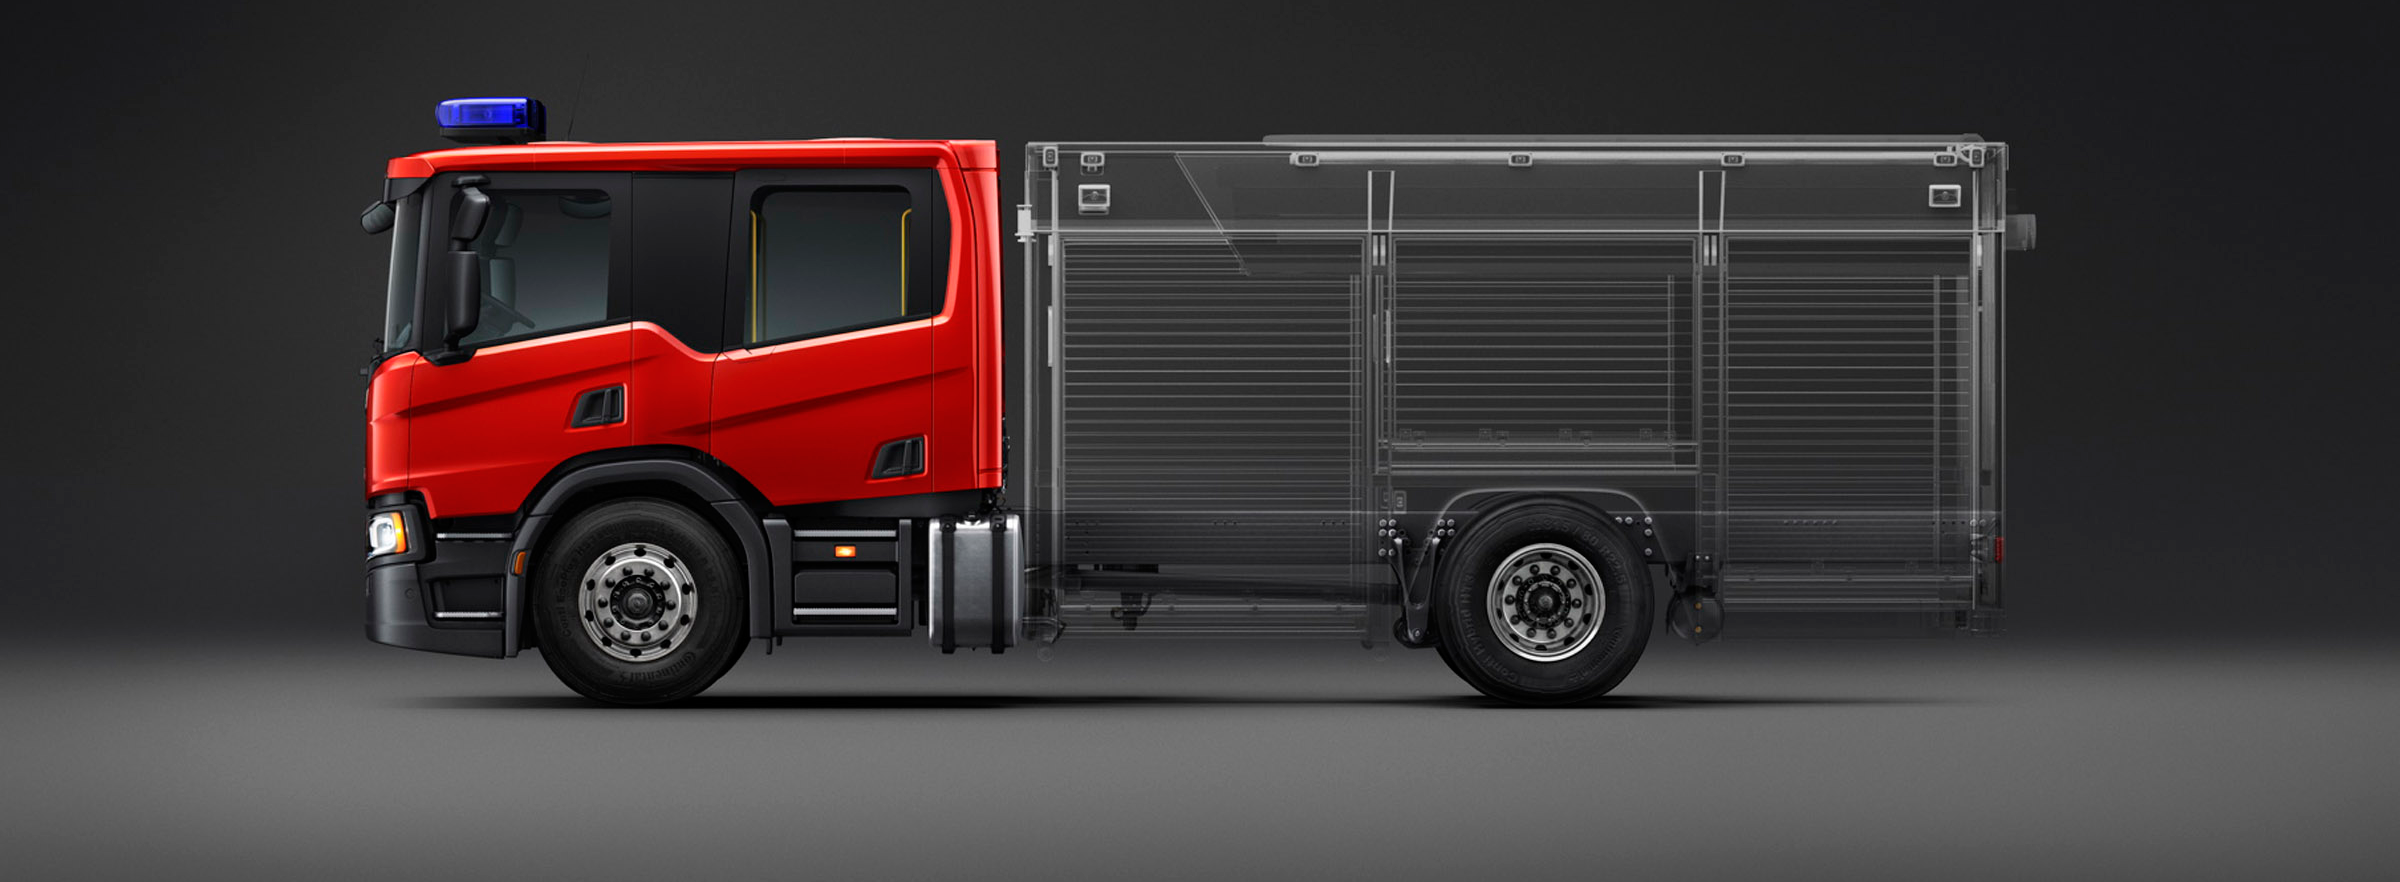 Scania launches new generation CrewCab - Keltruck Scania